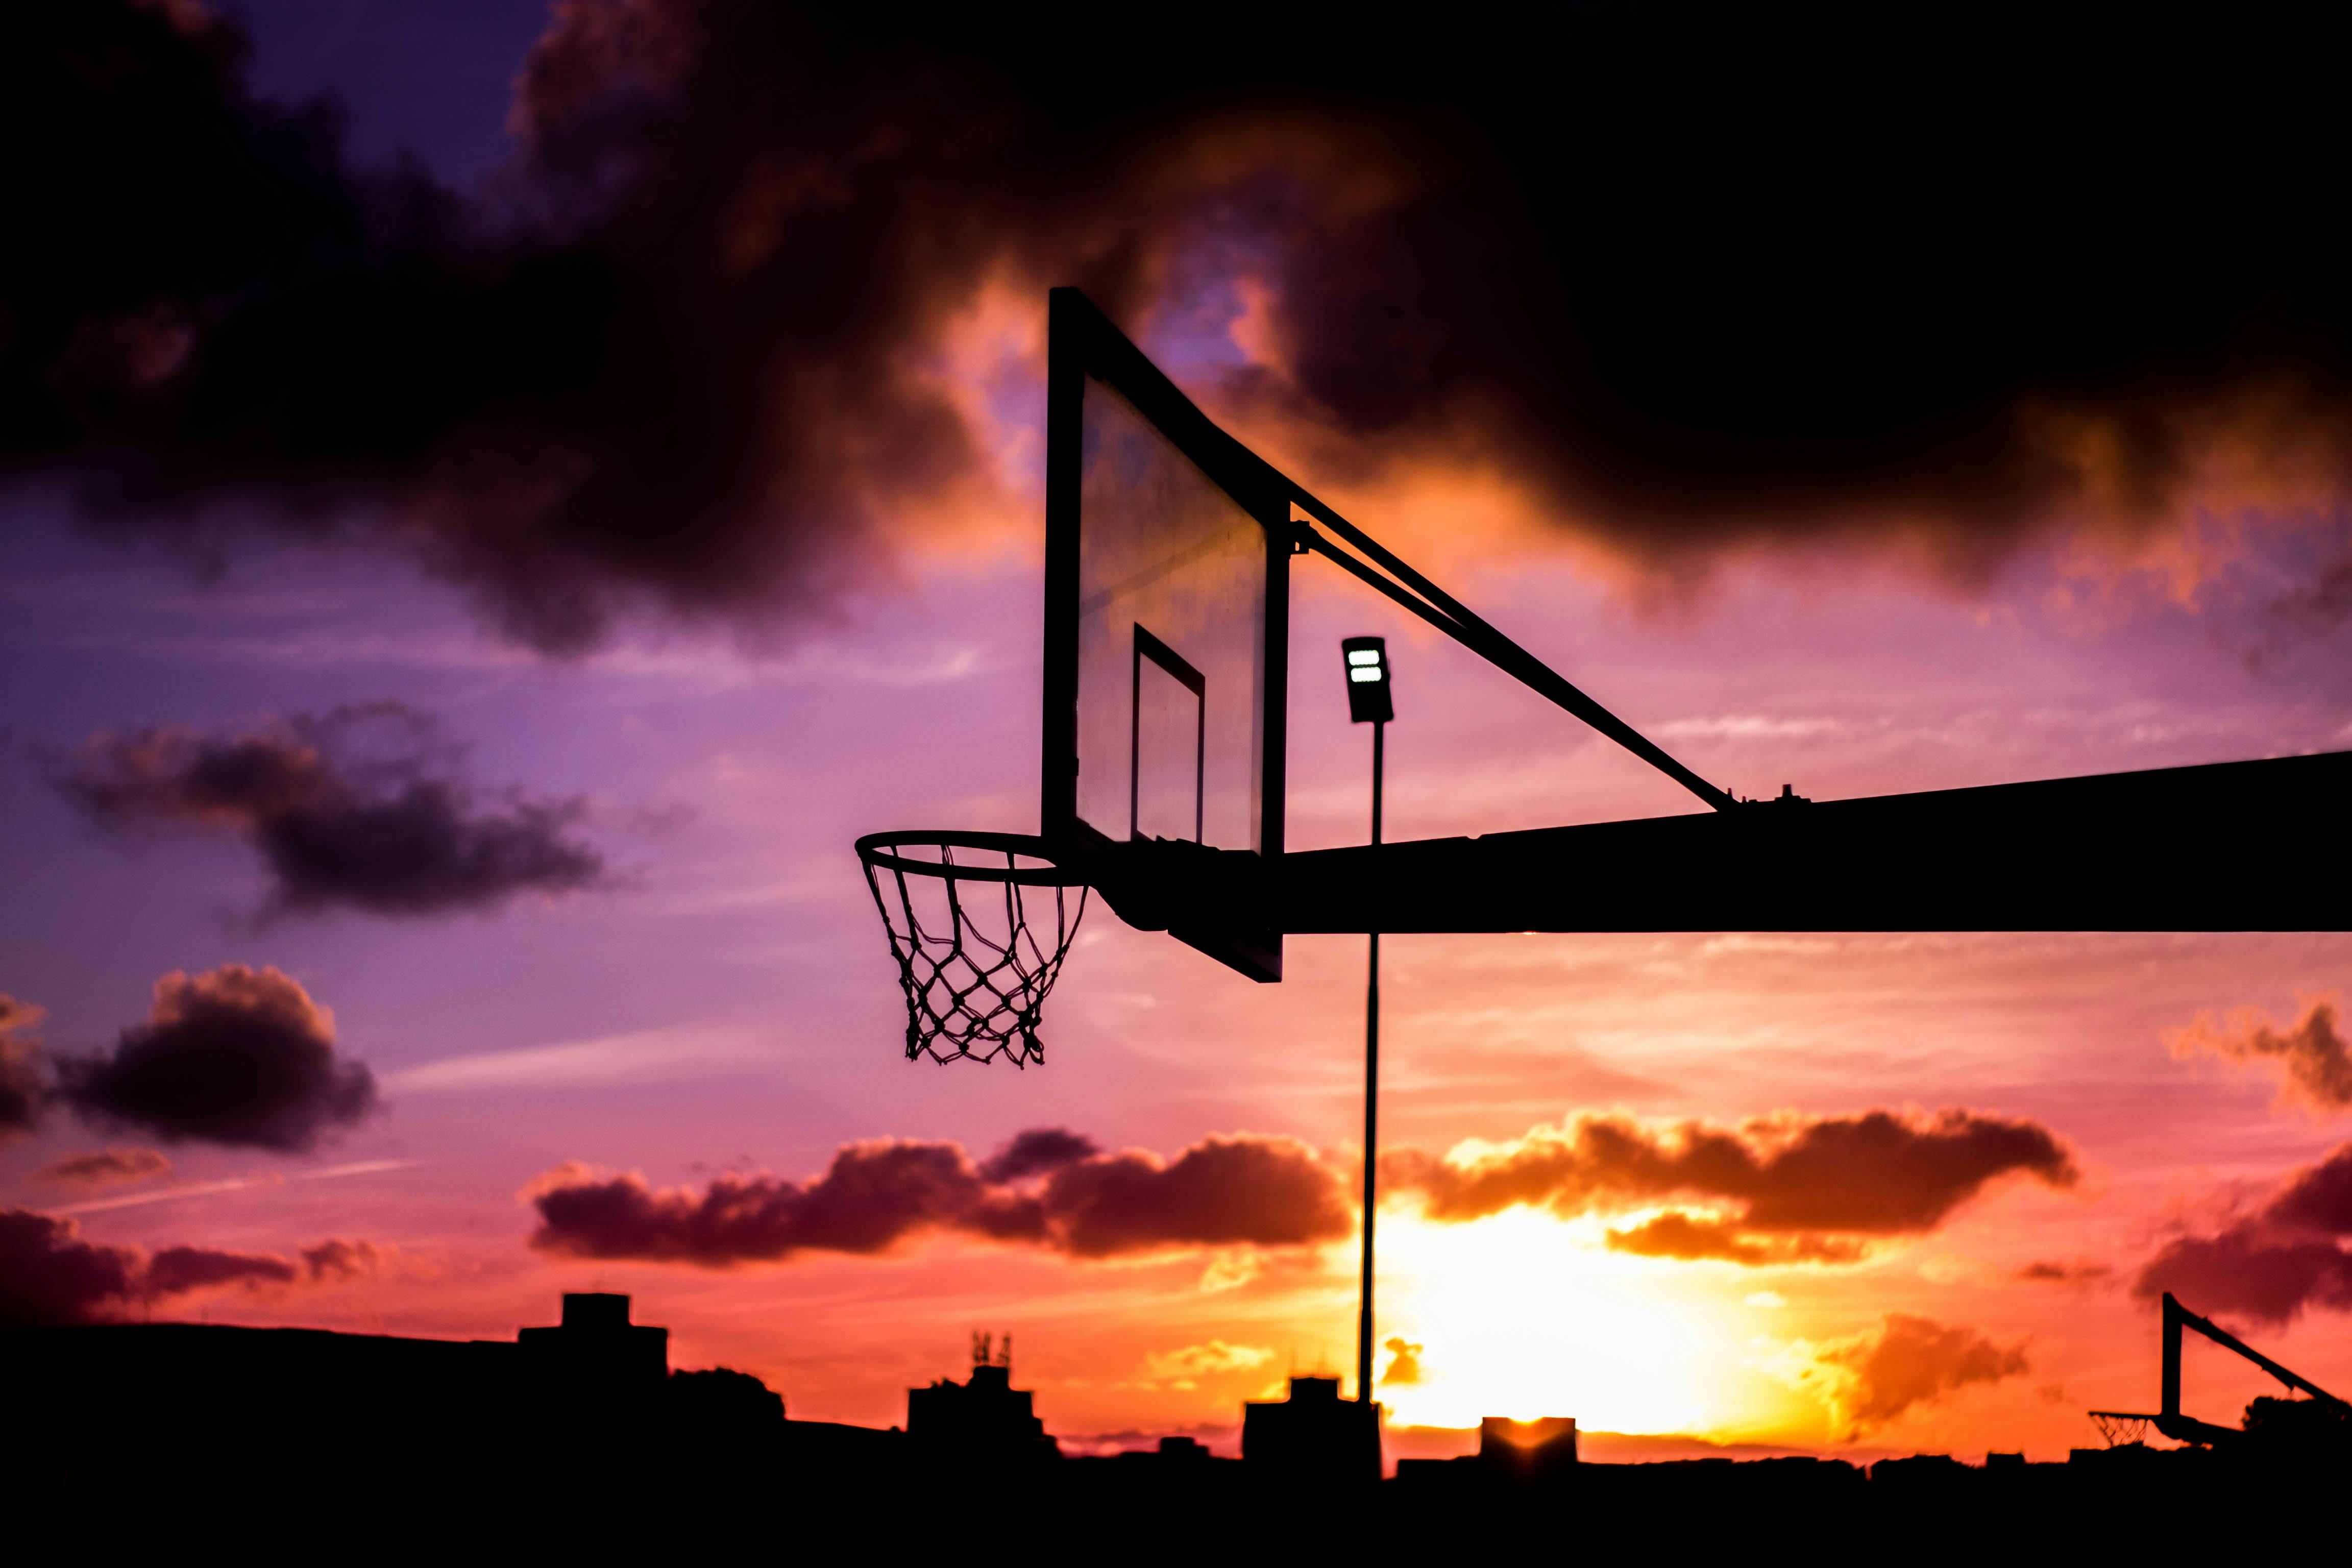 Sunset Basketball Dunk Live Wallpaper  free download